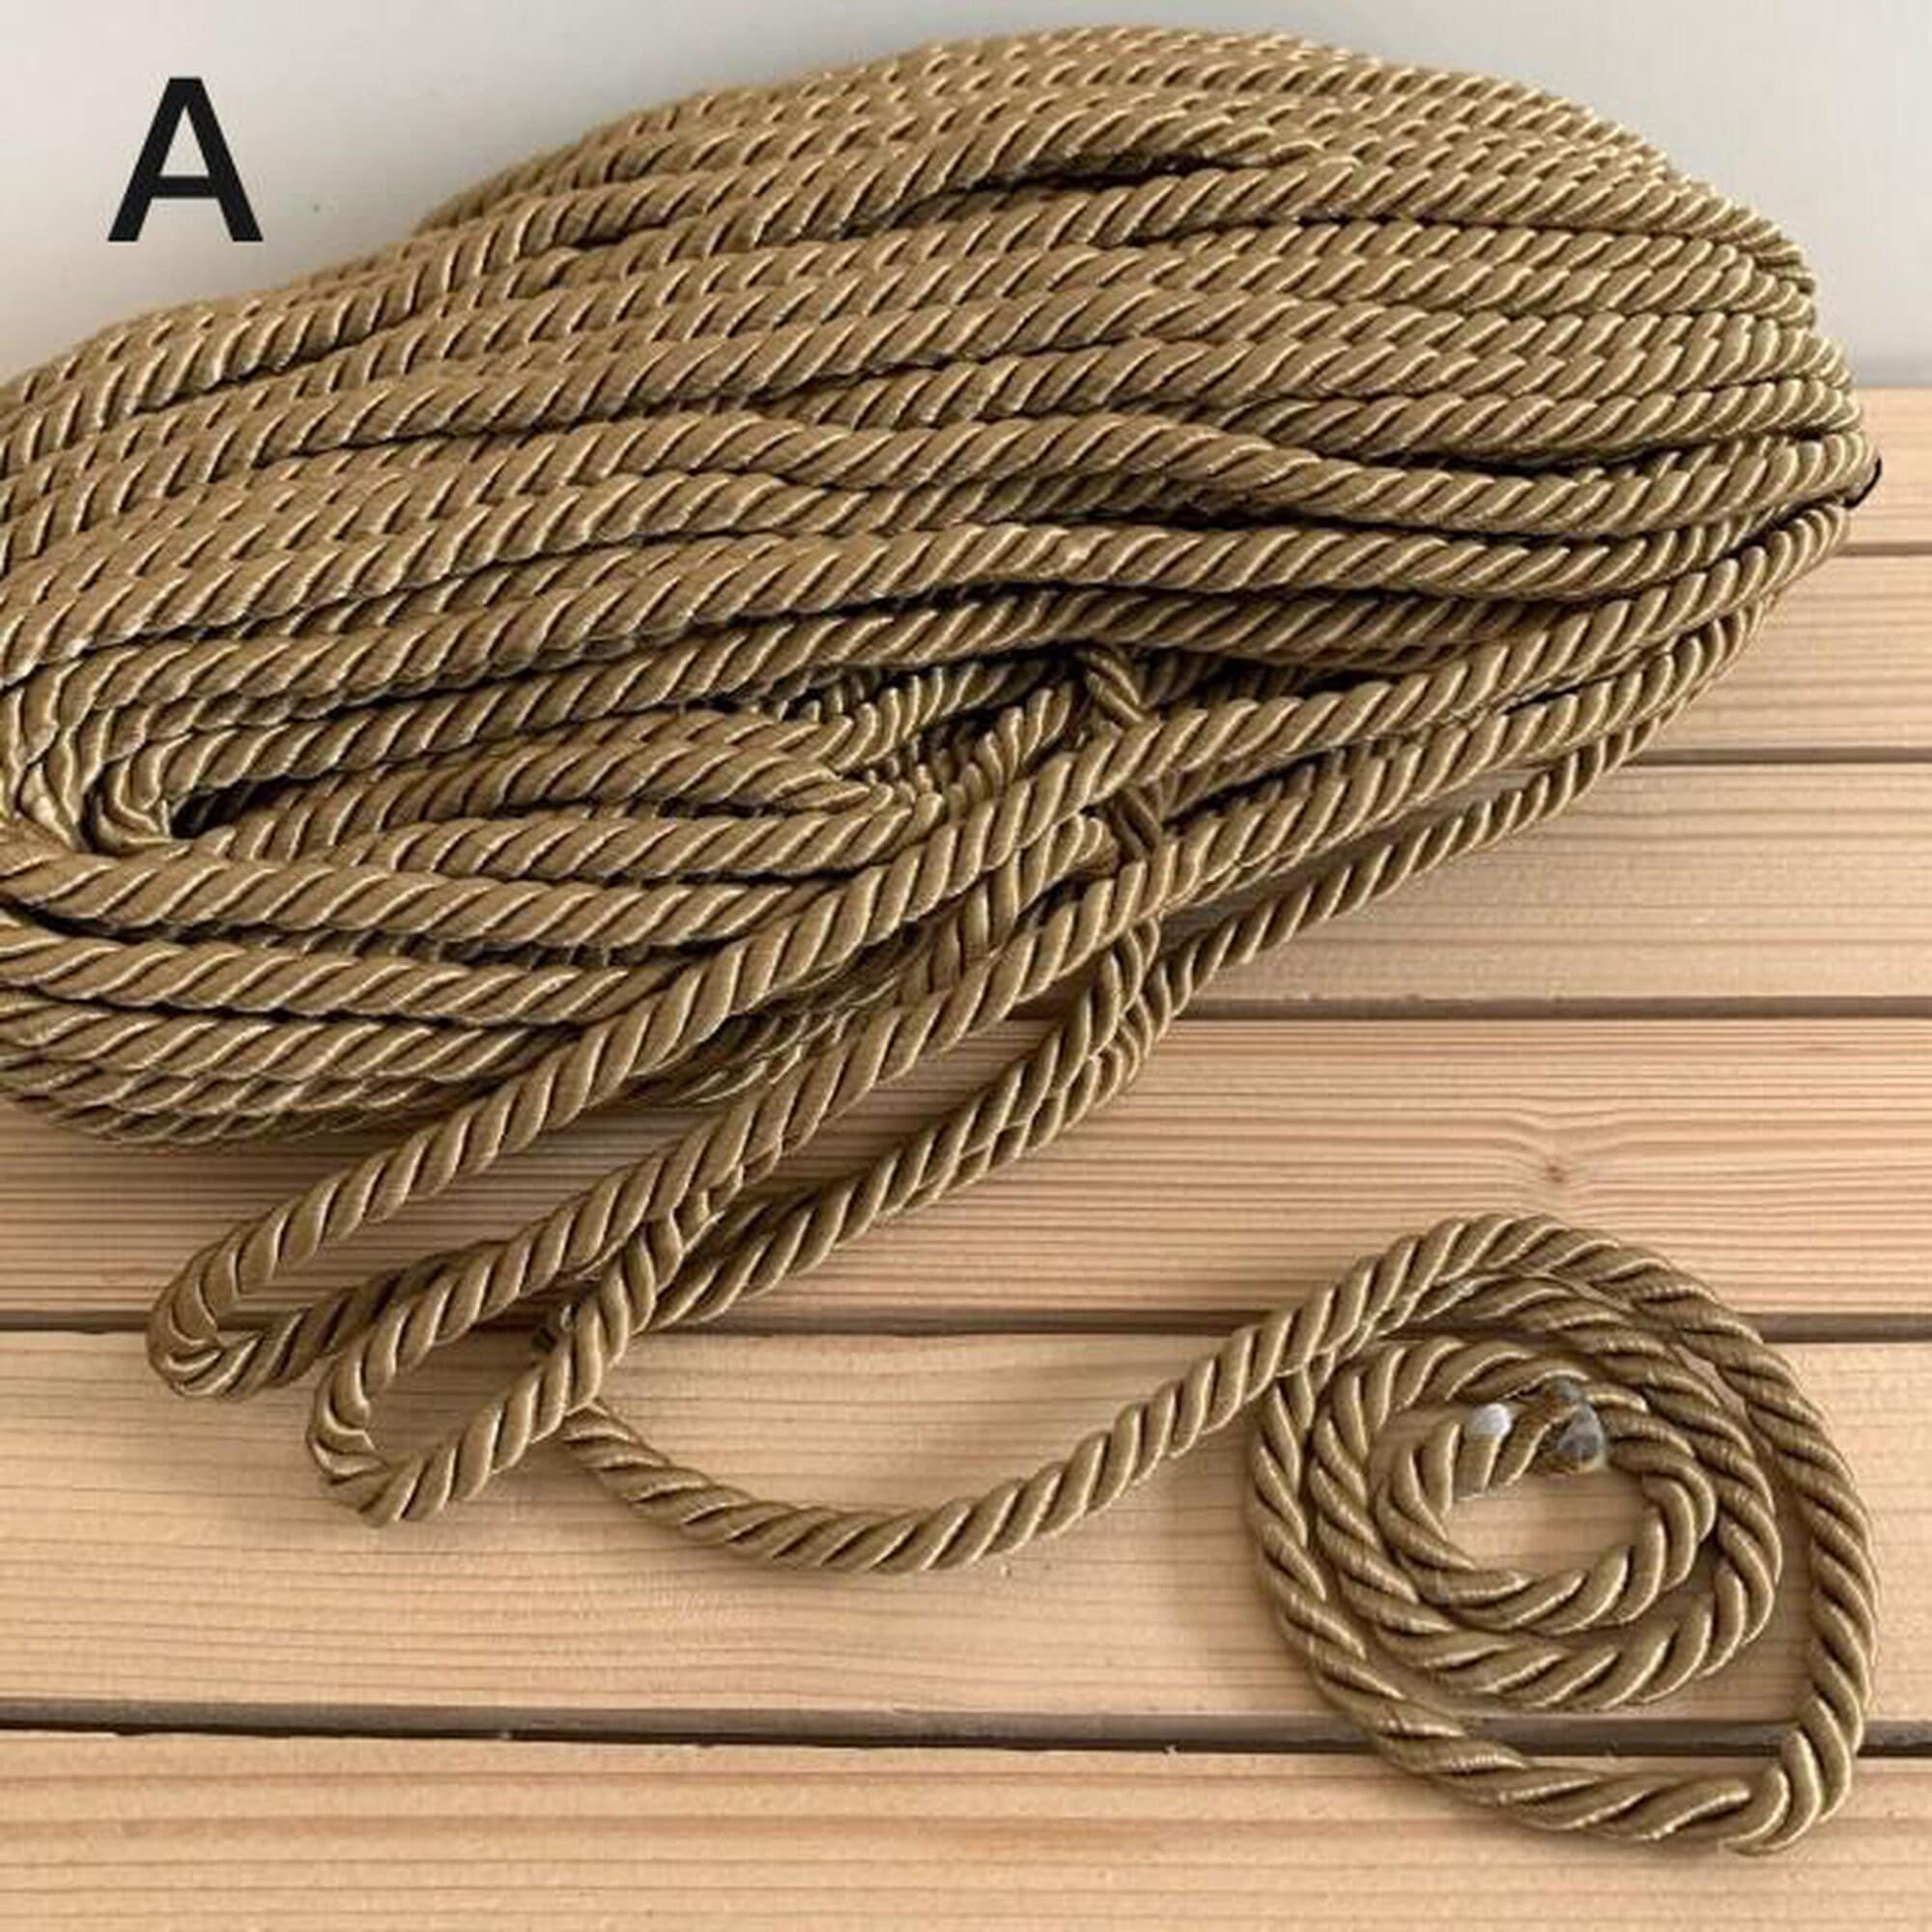 Spooled Natural Jute Shibari Rope 300+ feet Ready to use – deGiotto Rope